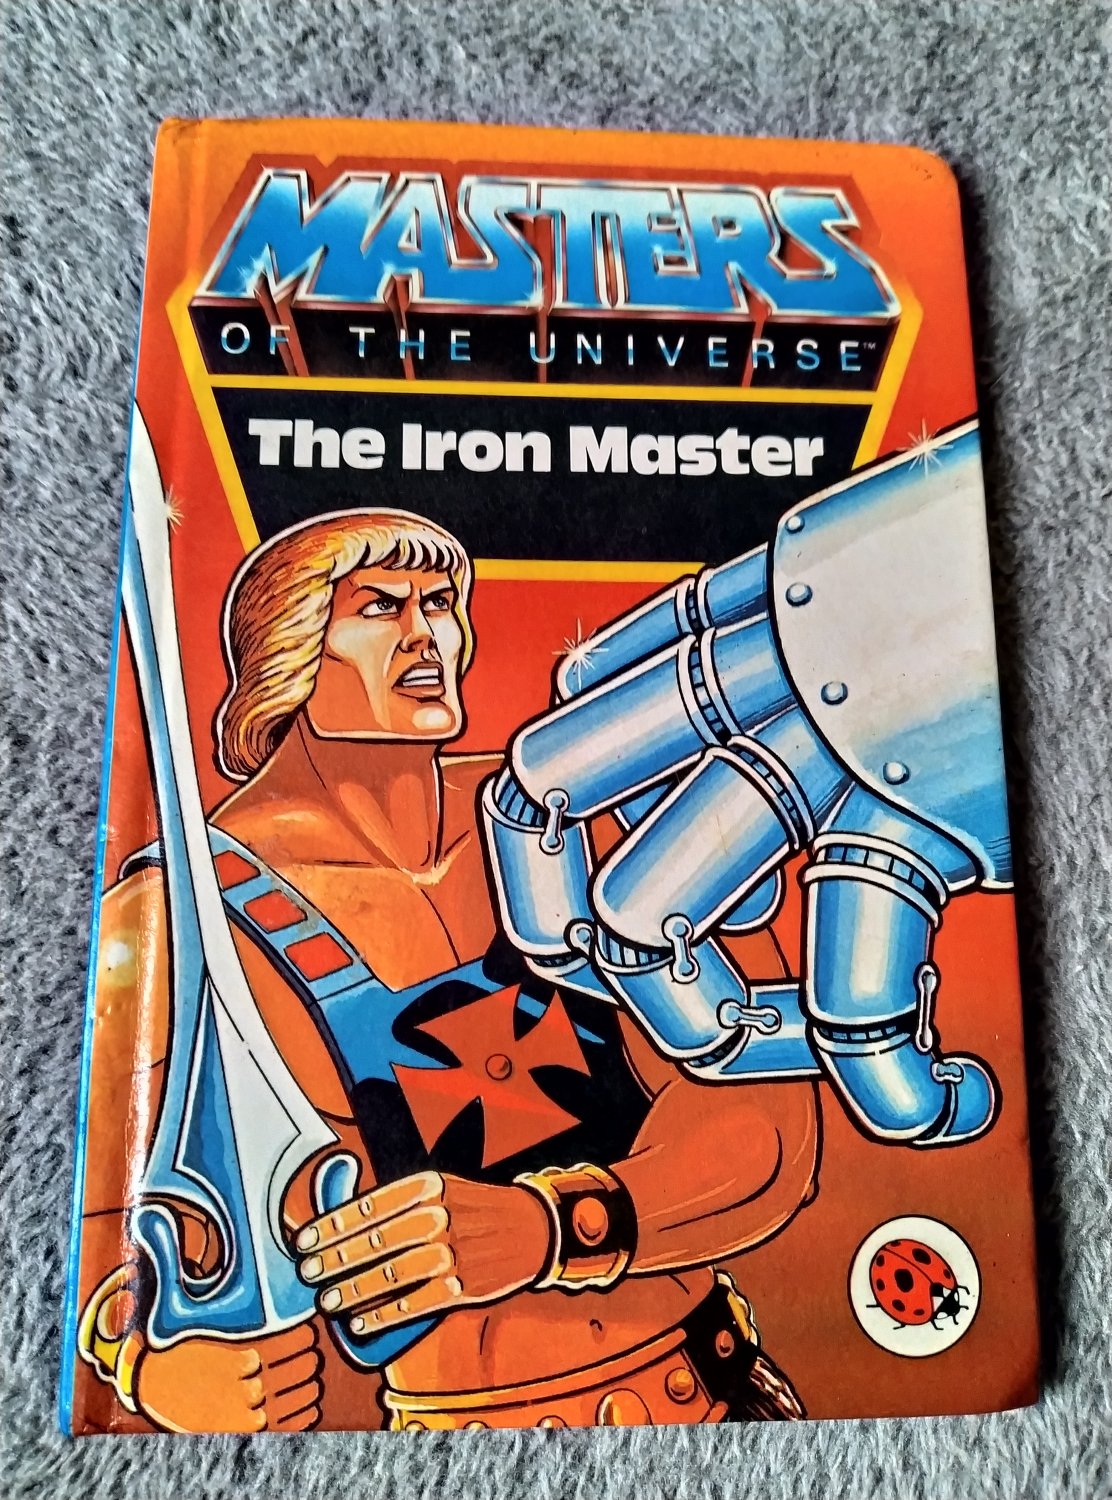 The Iron Master (Book)